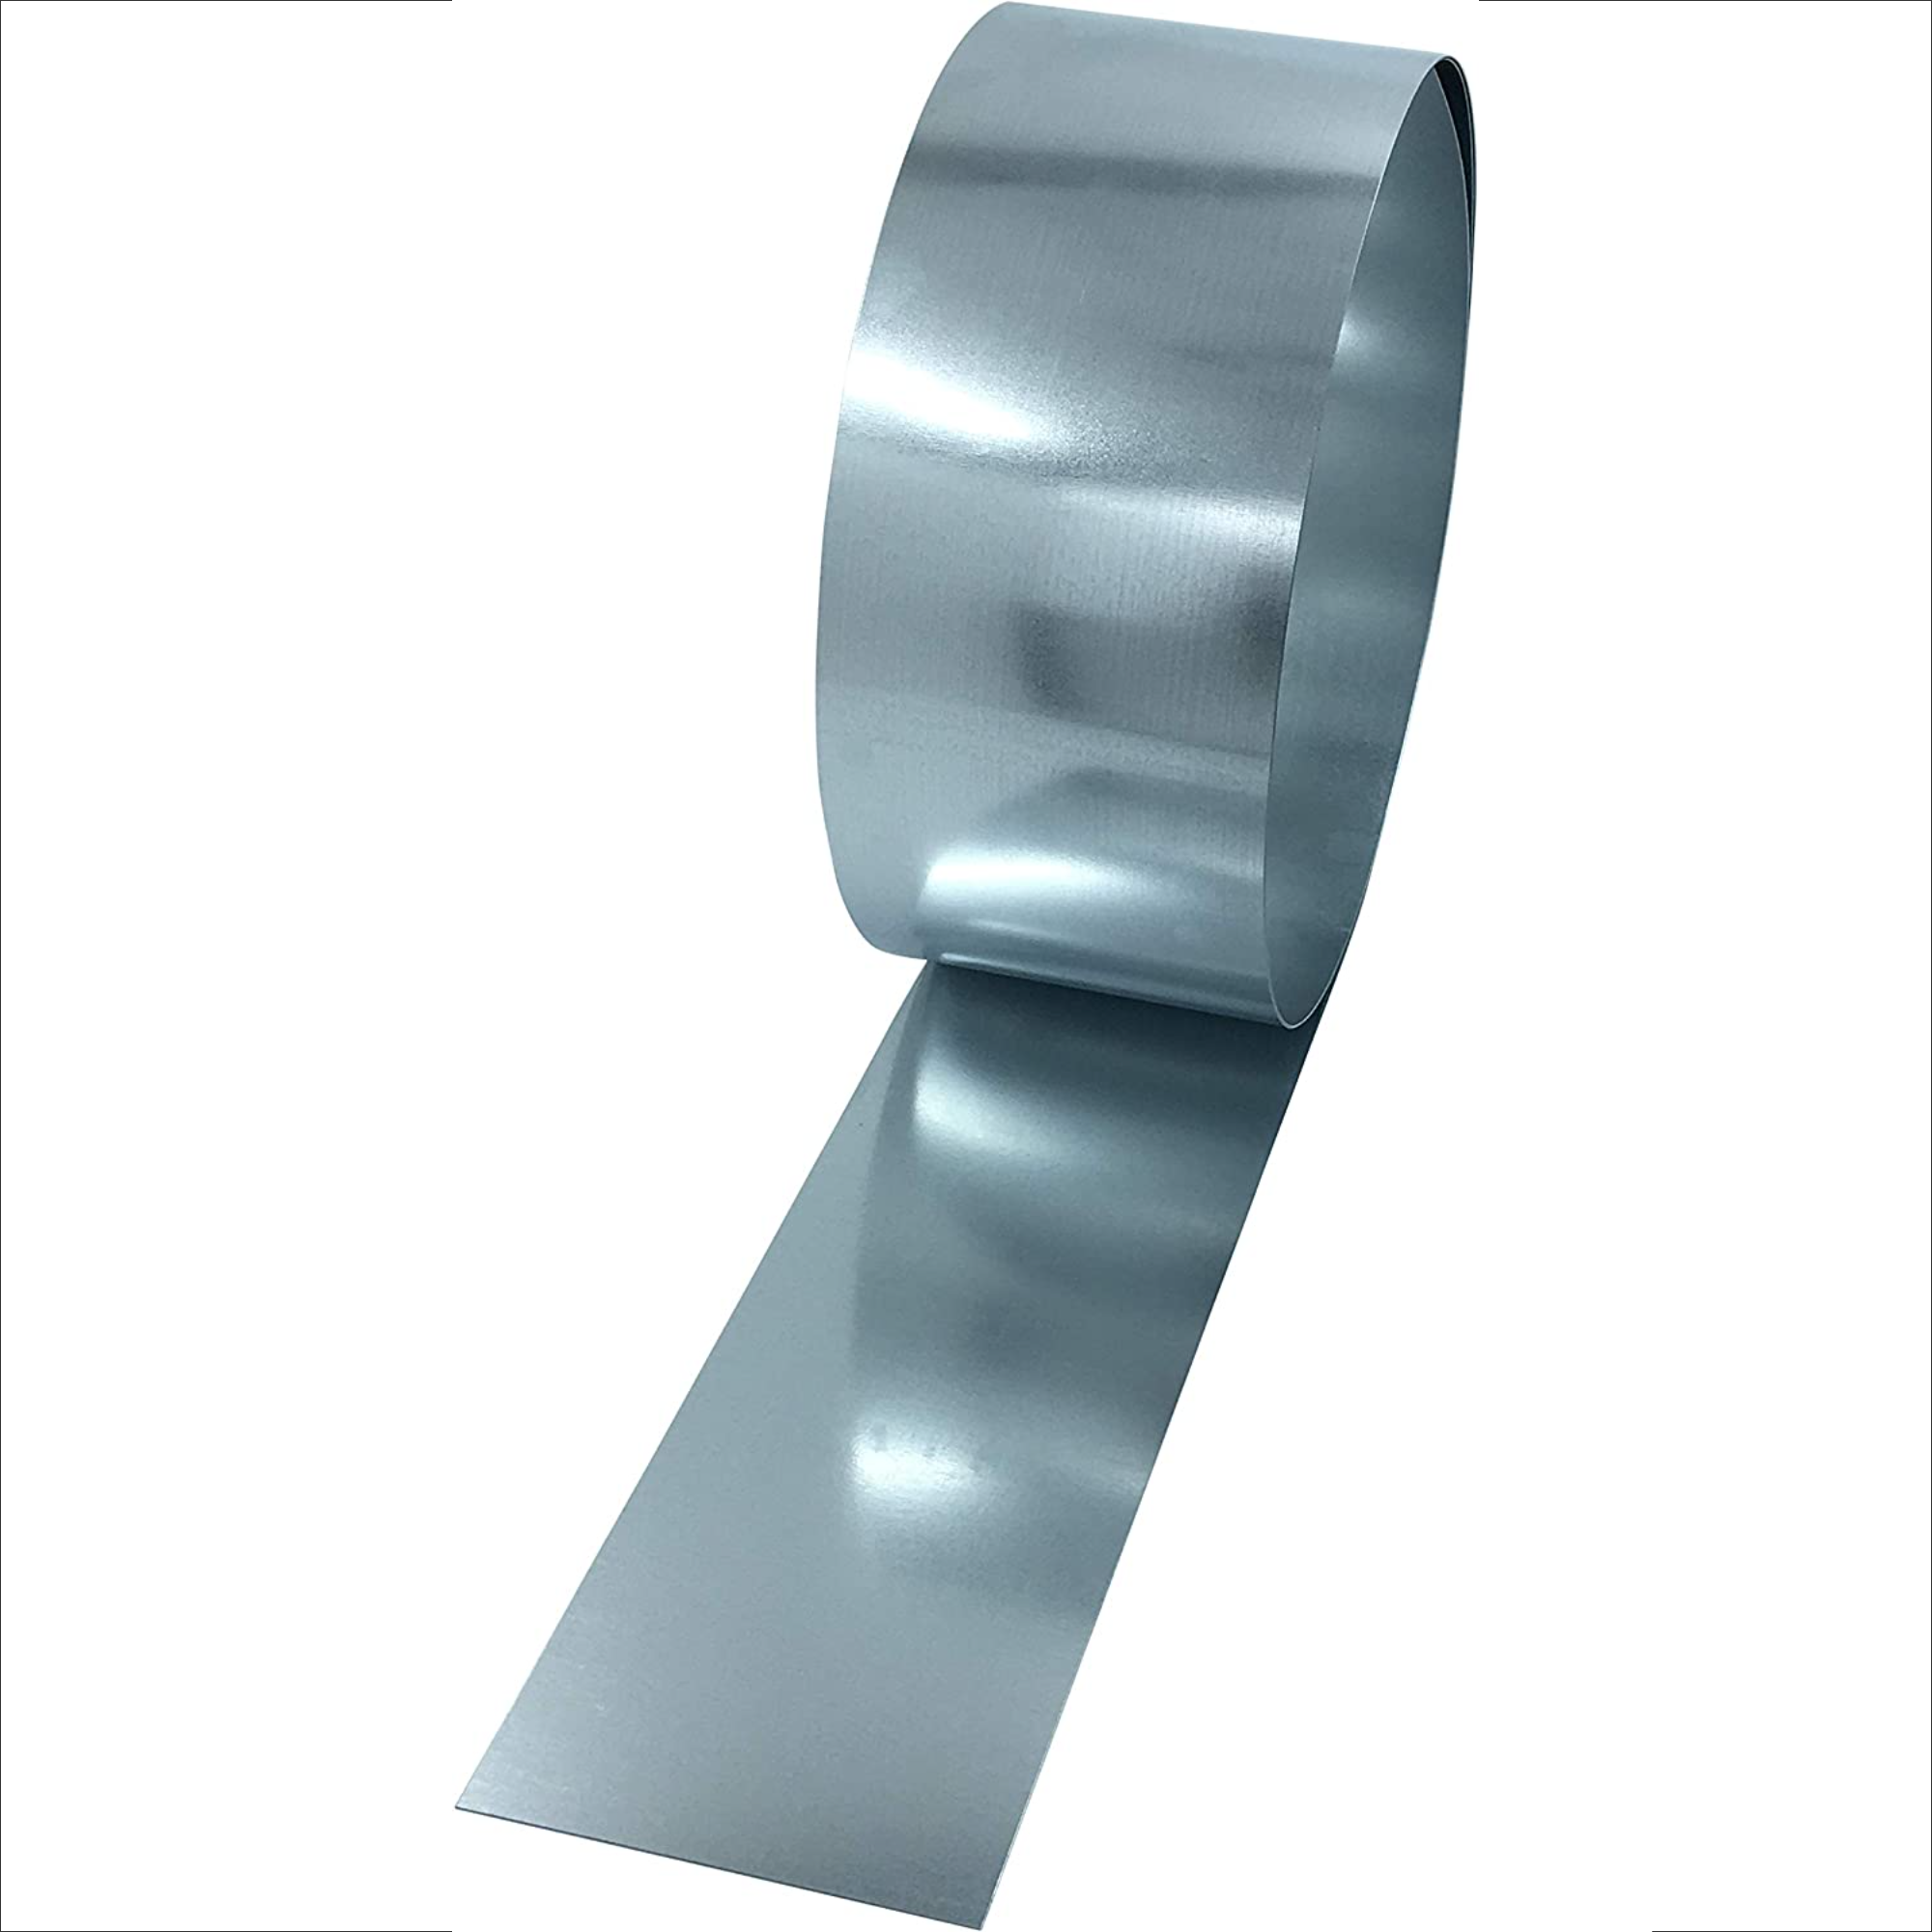 Galvanized Steel Flashing Rolls